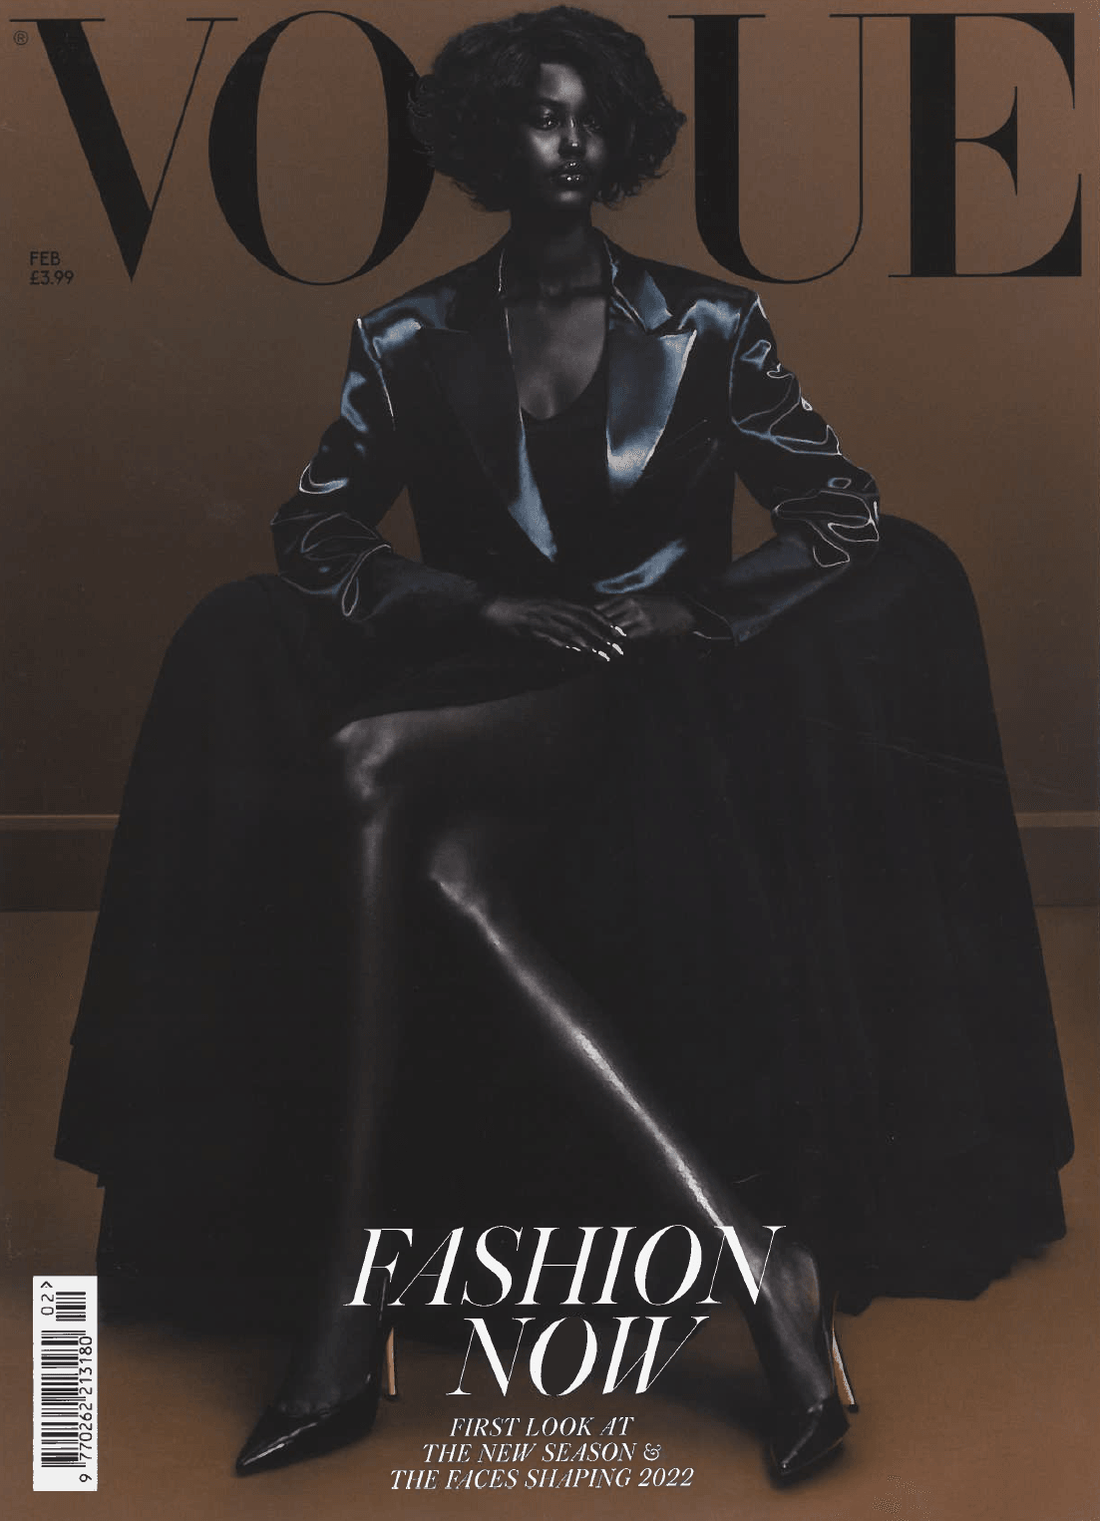 British Vogue feature Vogue Retail: Gifts To Raise The Spirits - Ron Tomson